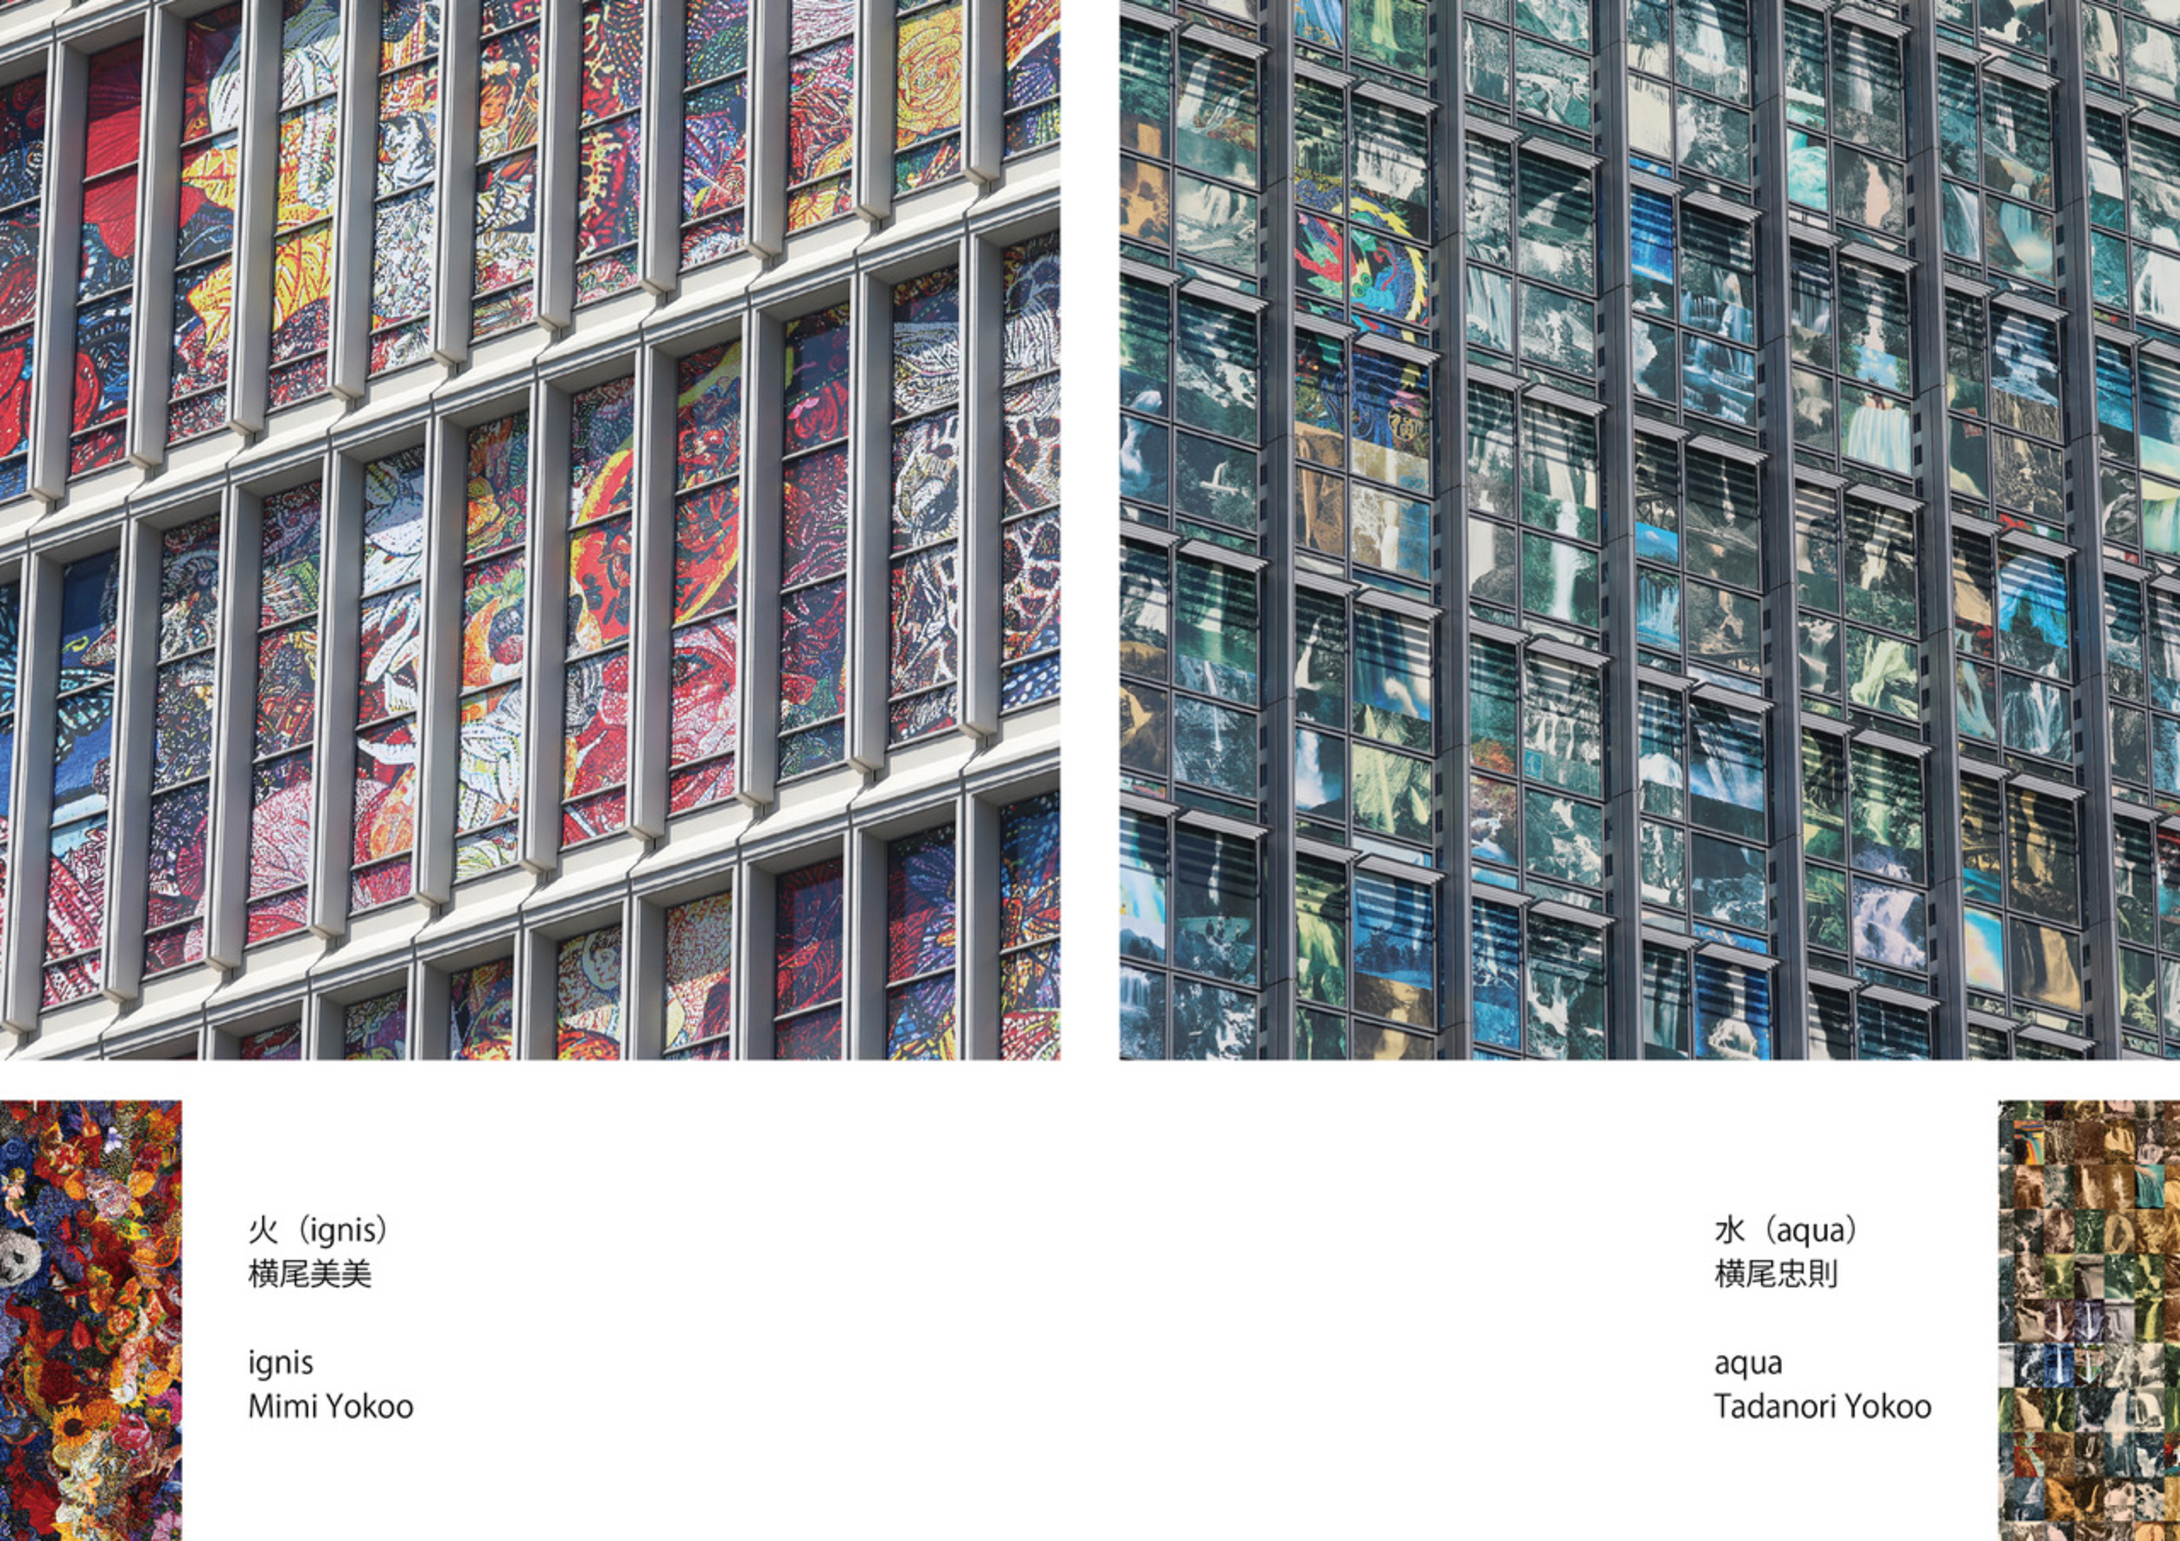 Tokyo’s Marunouchi district hosts a pair of memorable murals.